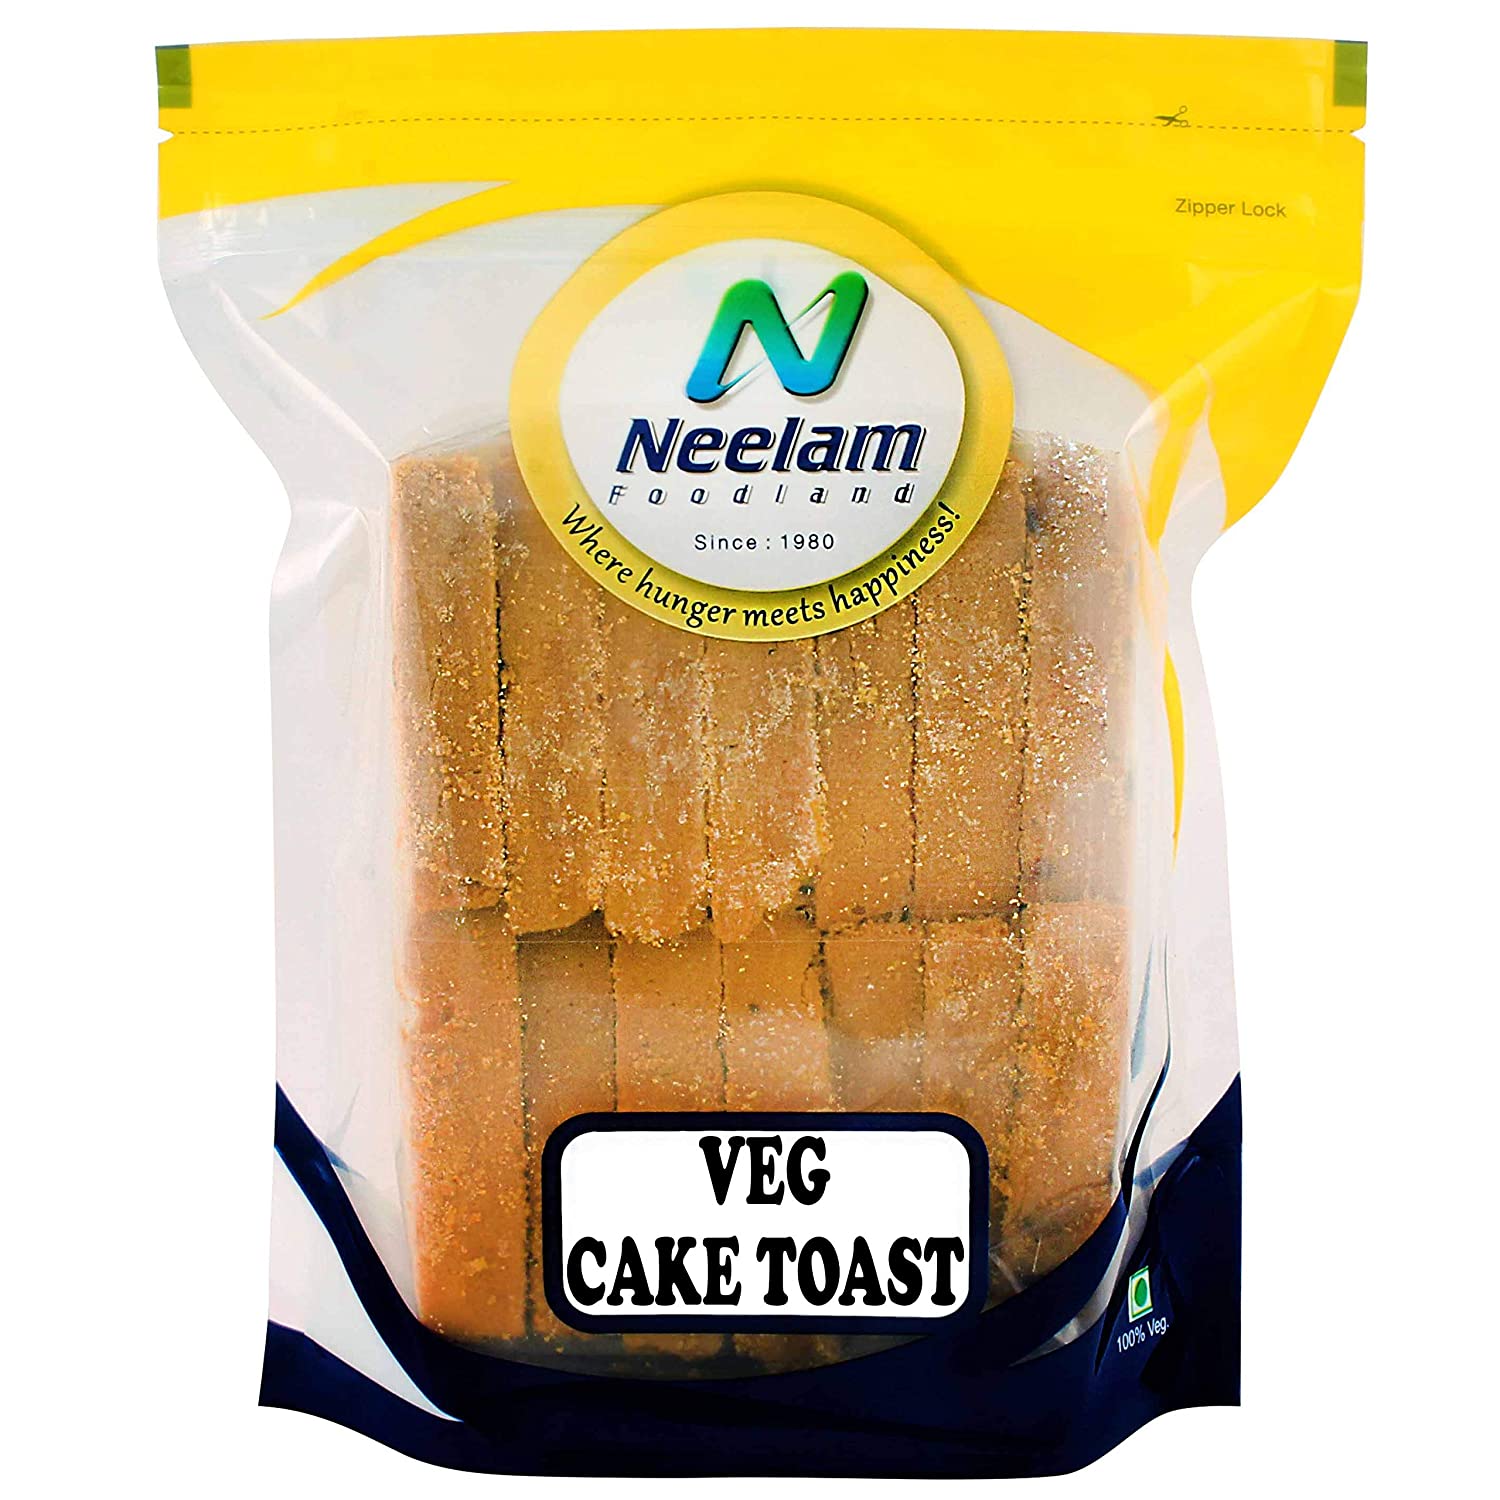 Neelam Foodland Veg Cake Toast Image